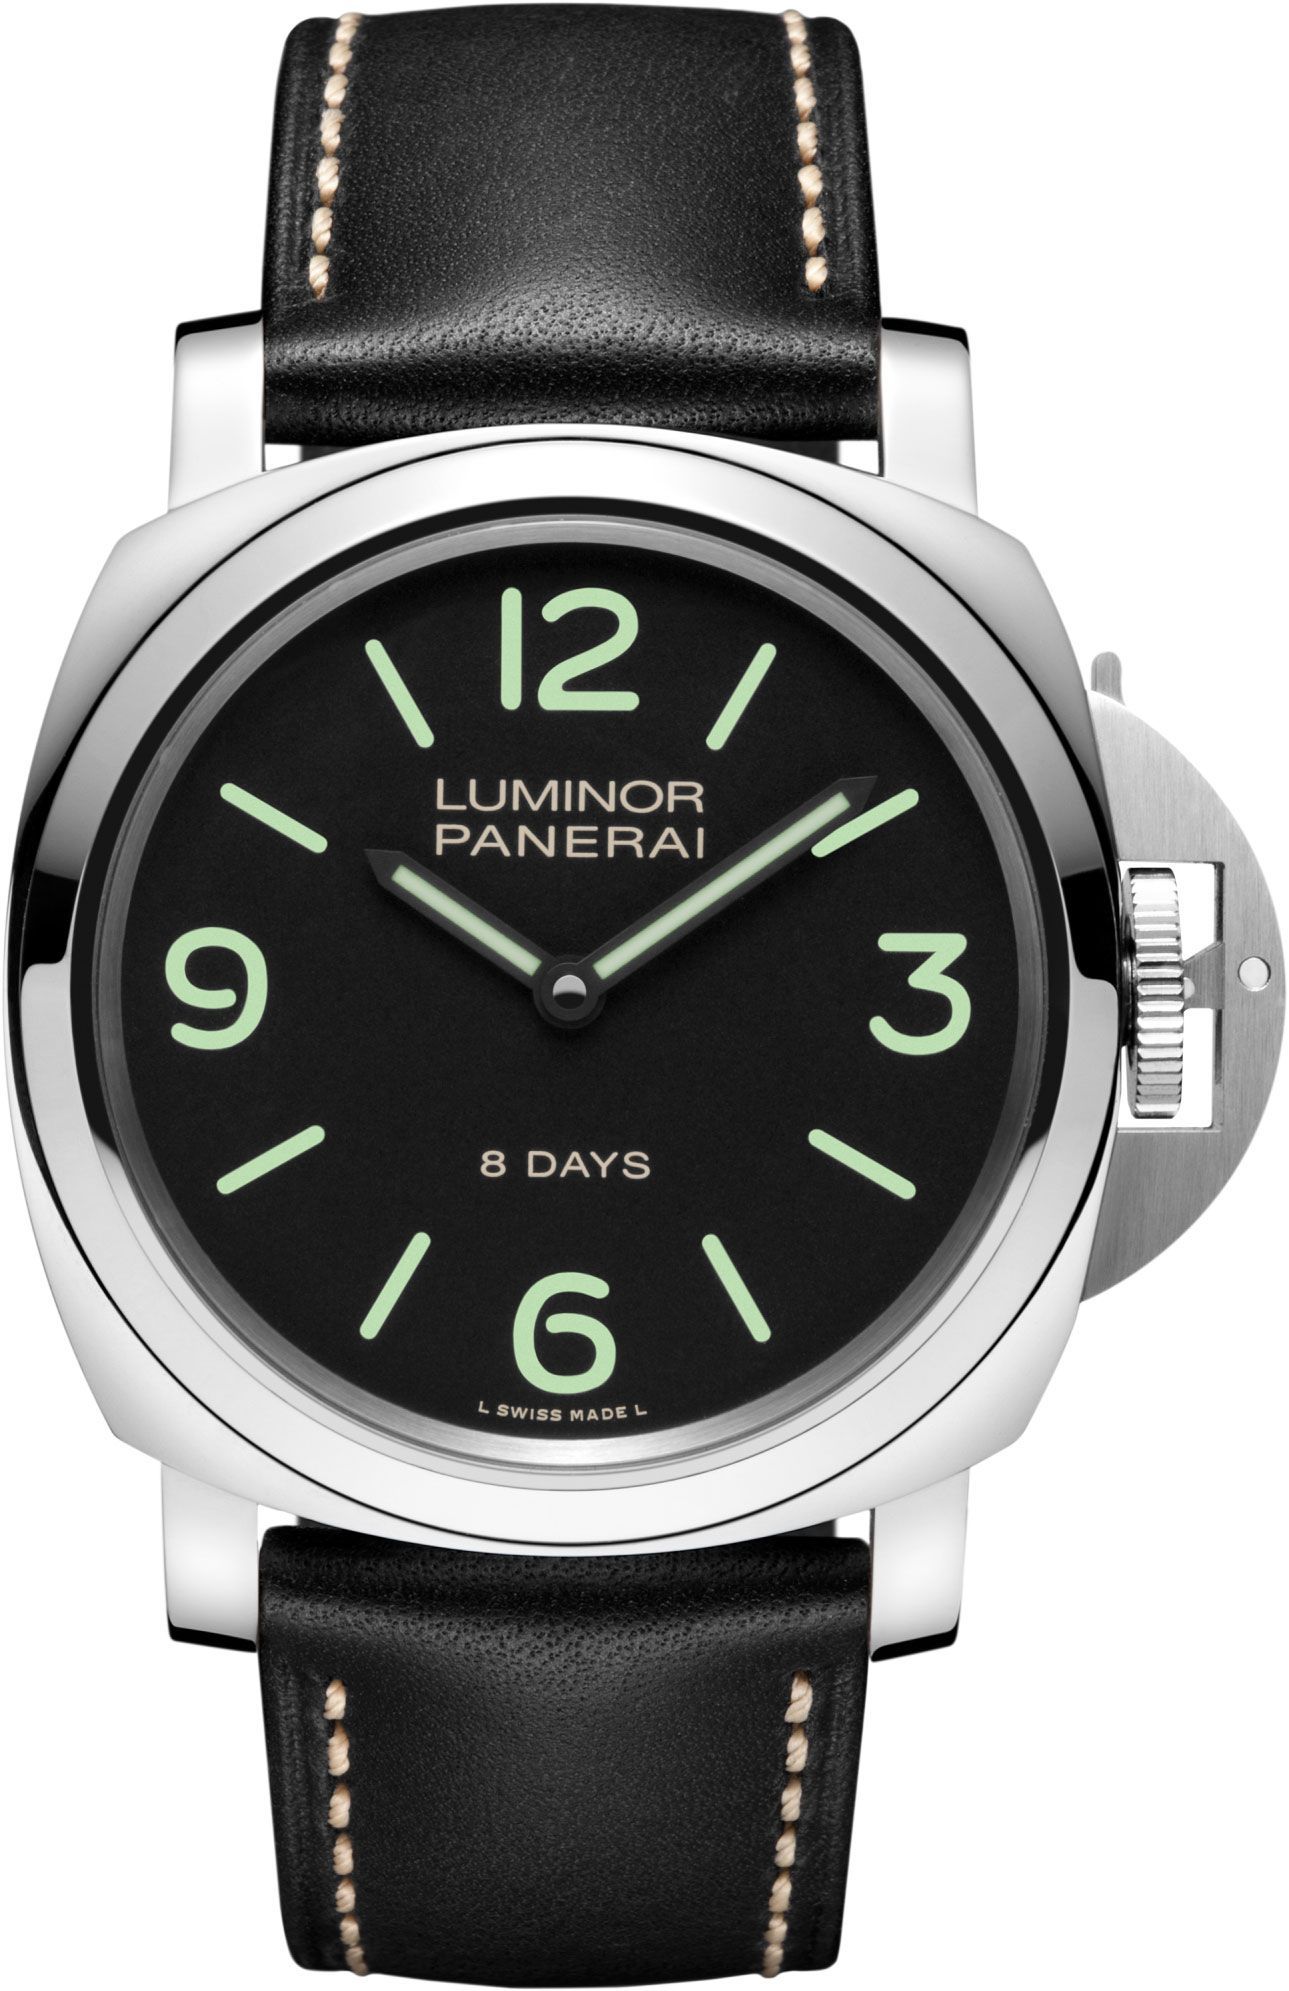 Panerai Luminor 8 Days Acciaio Black Dial 44 mm Manual Winding Watch For Men - 1